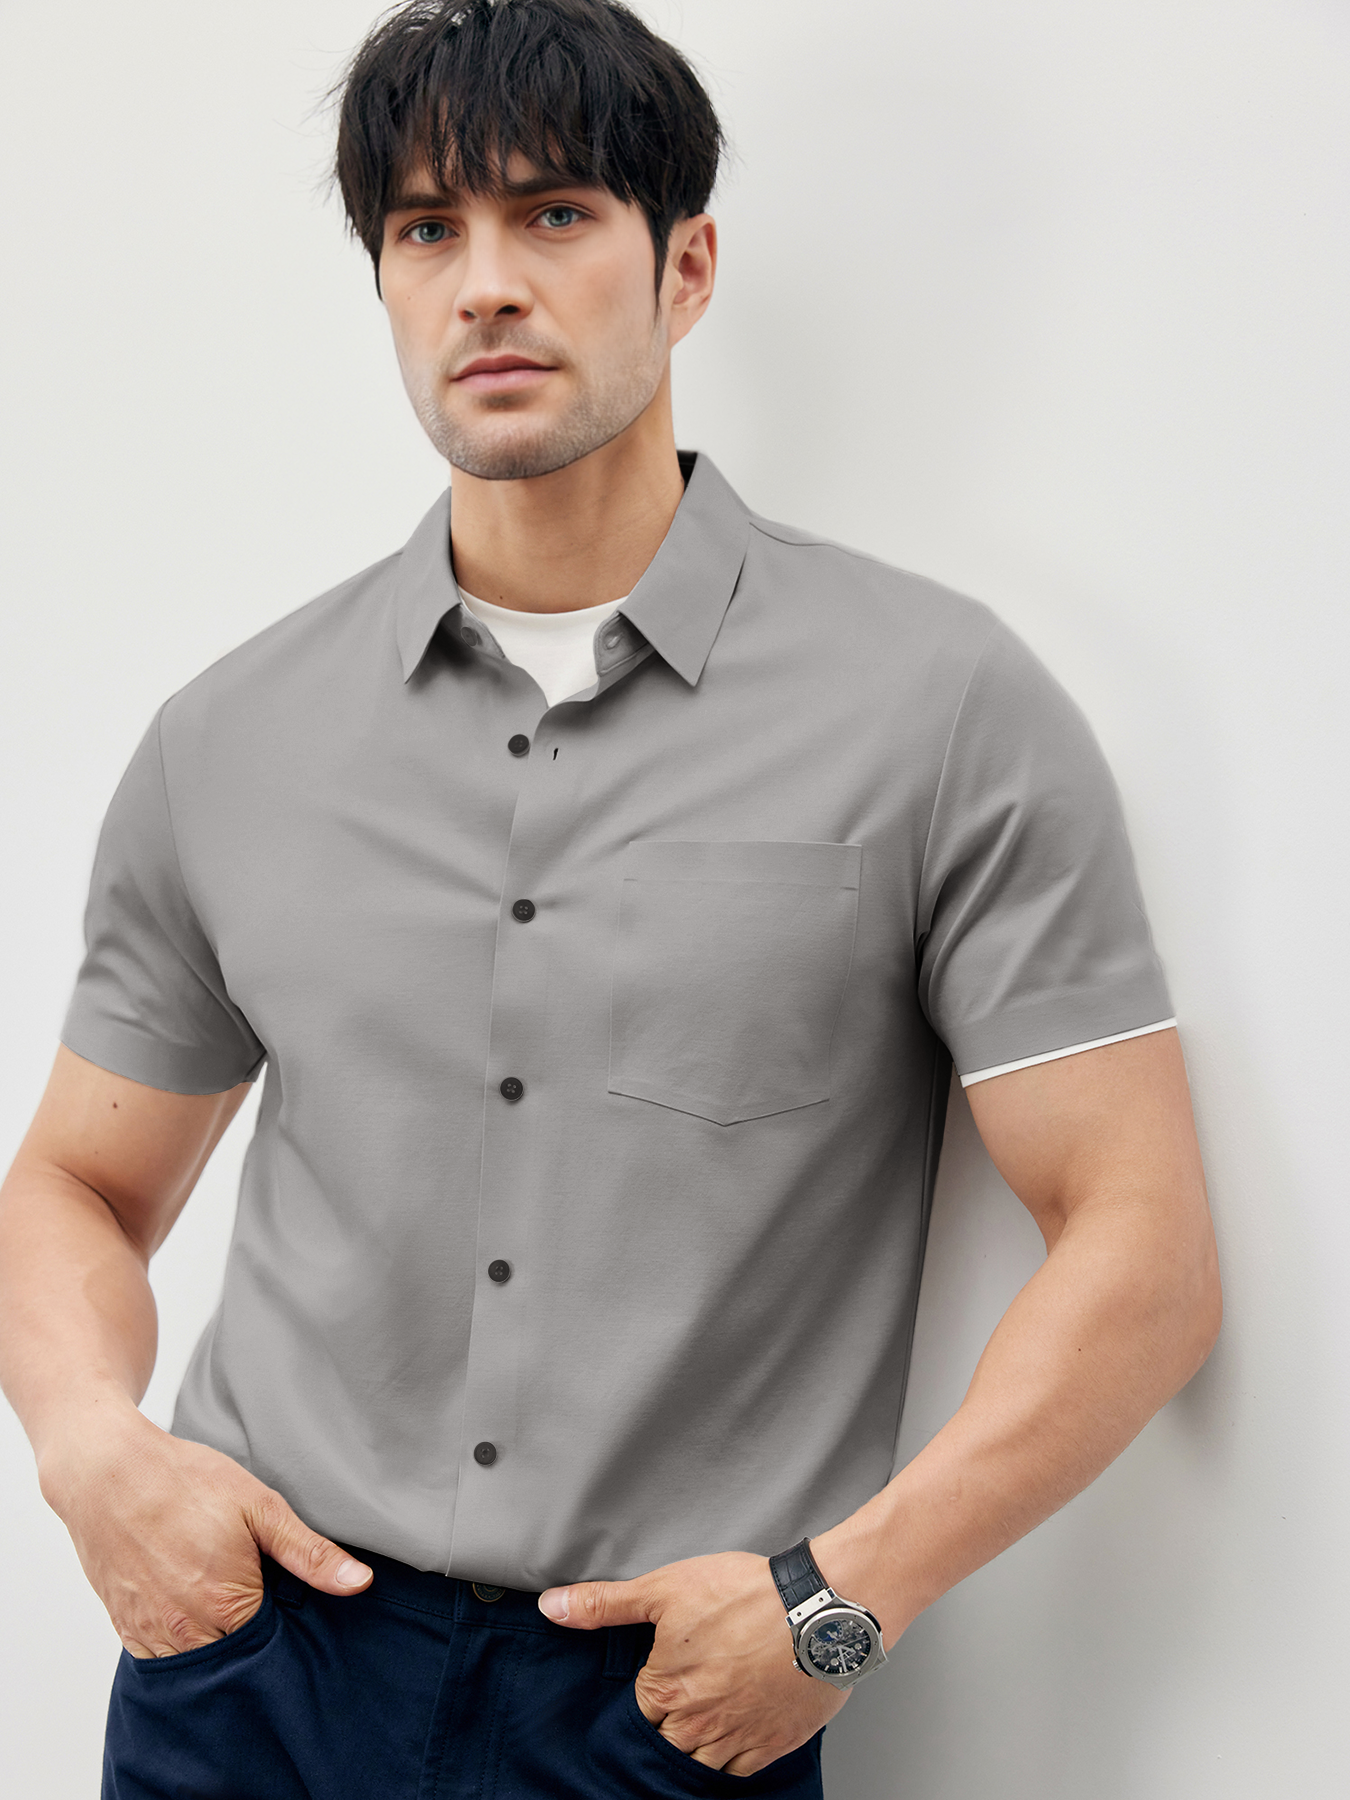 ChillLux Wrinkle-free Short Sleeve Shirt